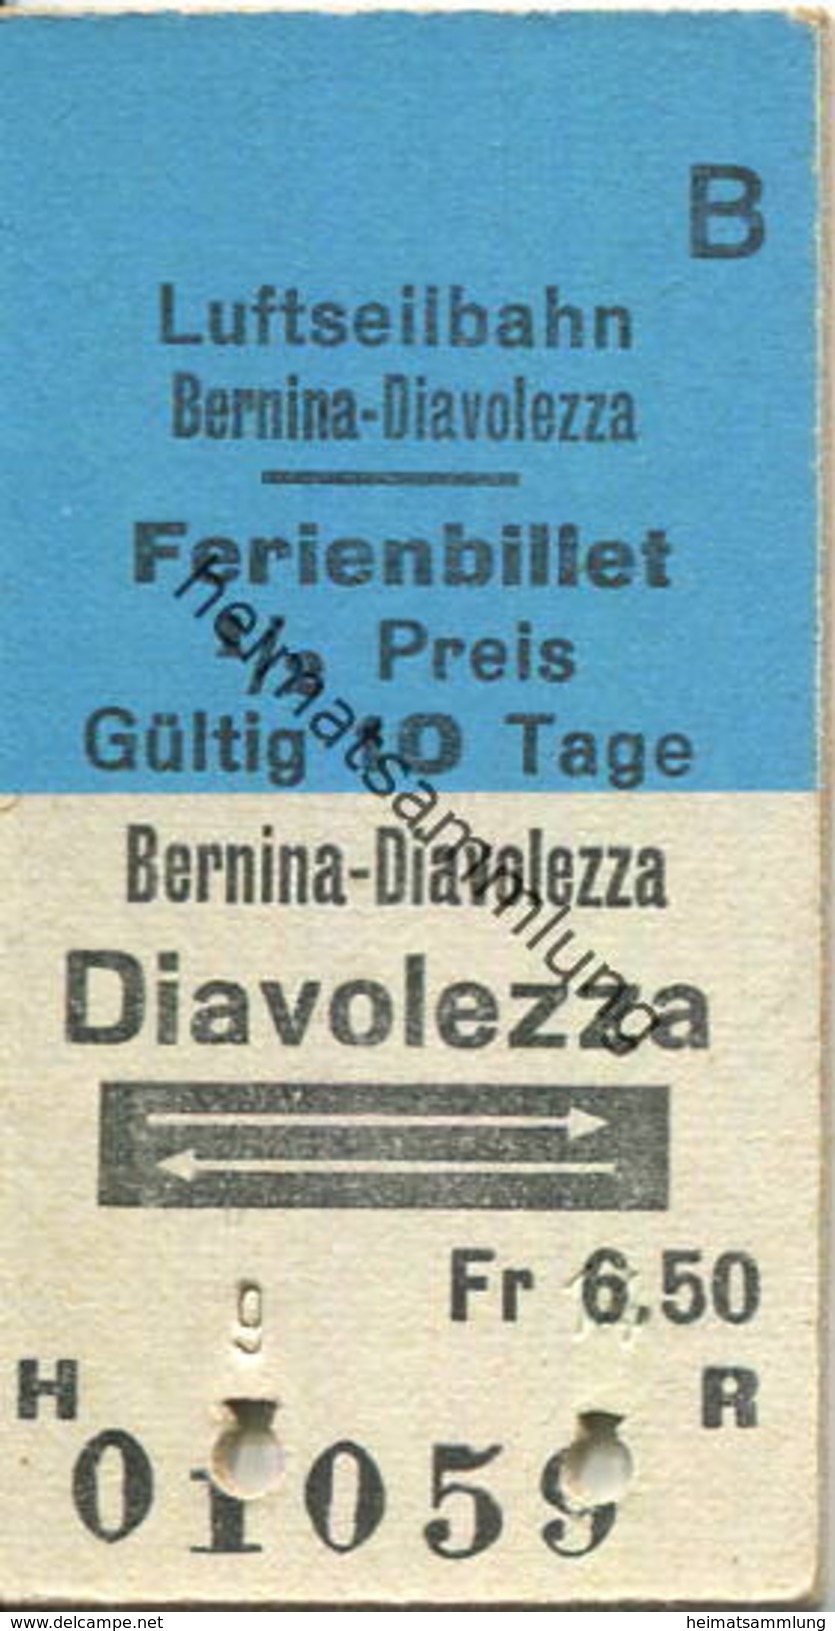 Schweiz - Luftseilbahn Bernina-Diavolezza - Ferienbillet - Fahrkarte 1/2 Preis Fr 6.50 - Europa